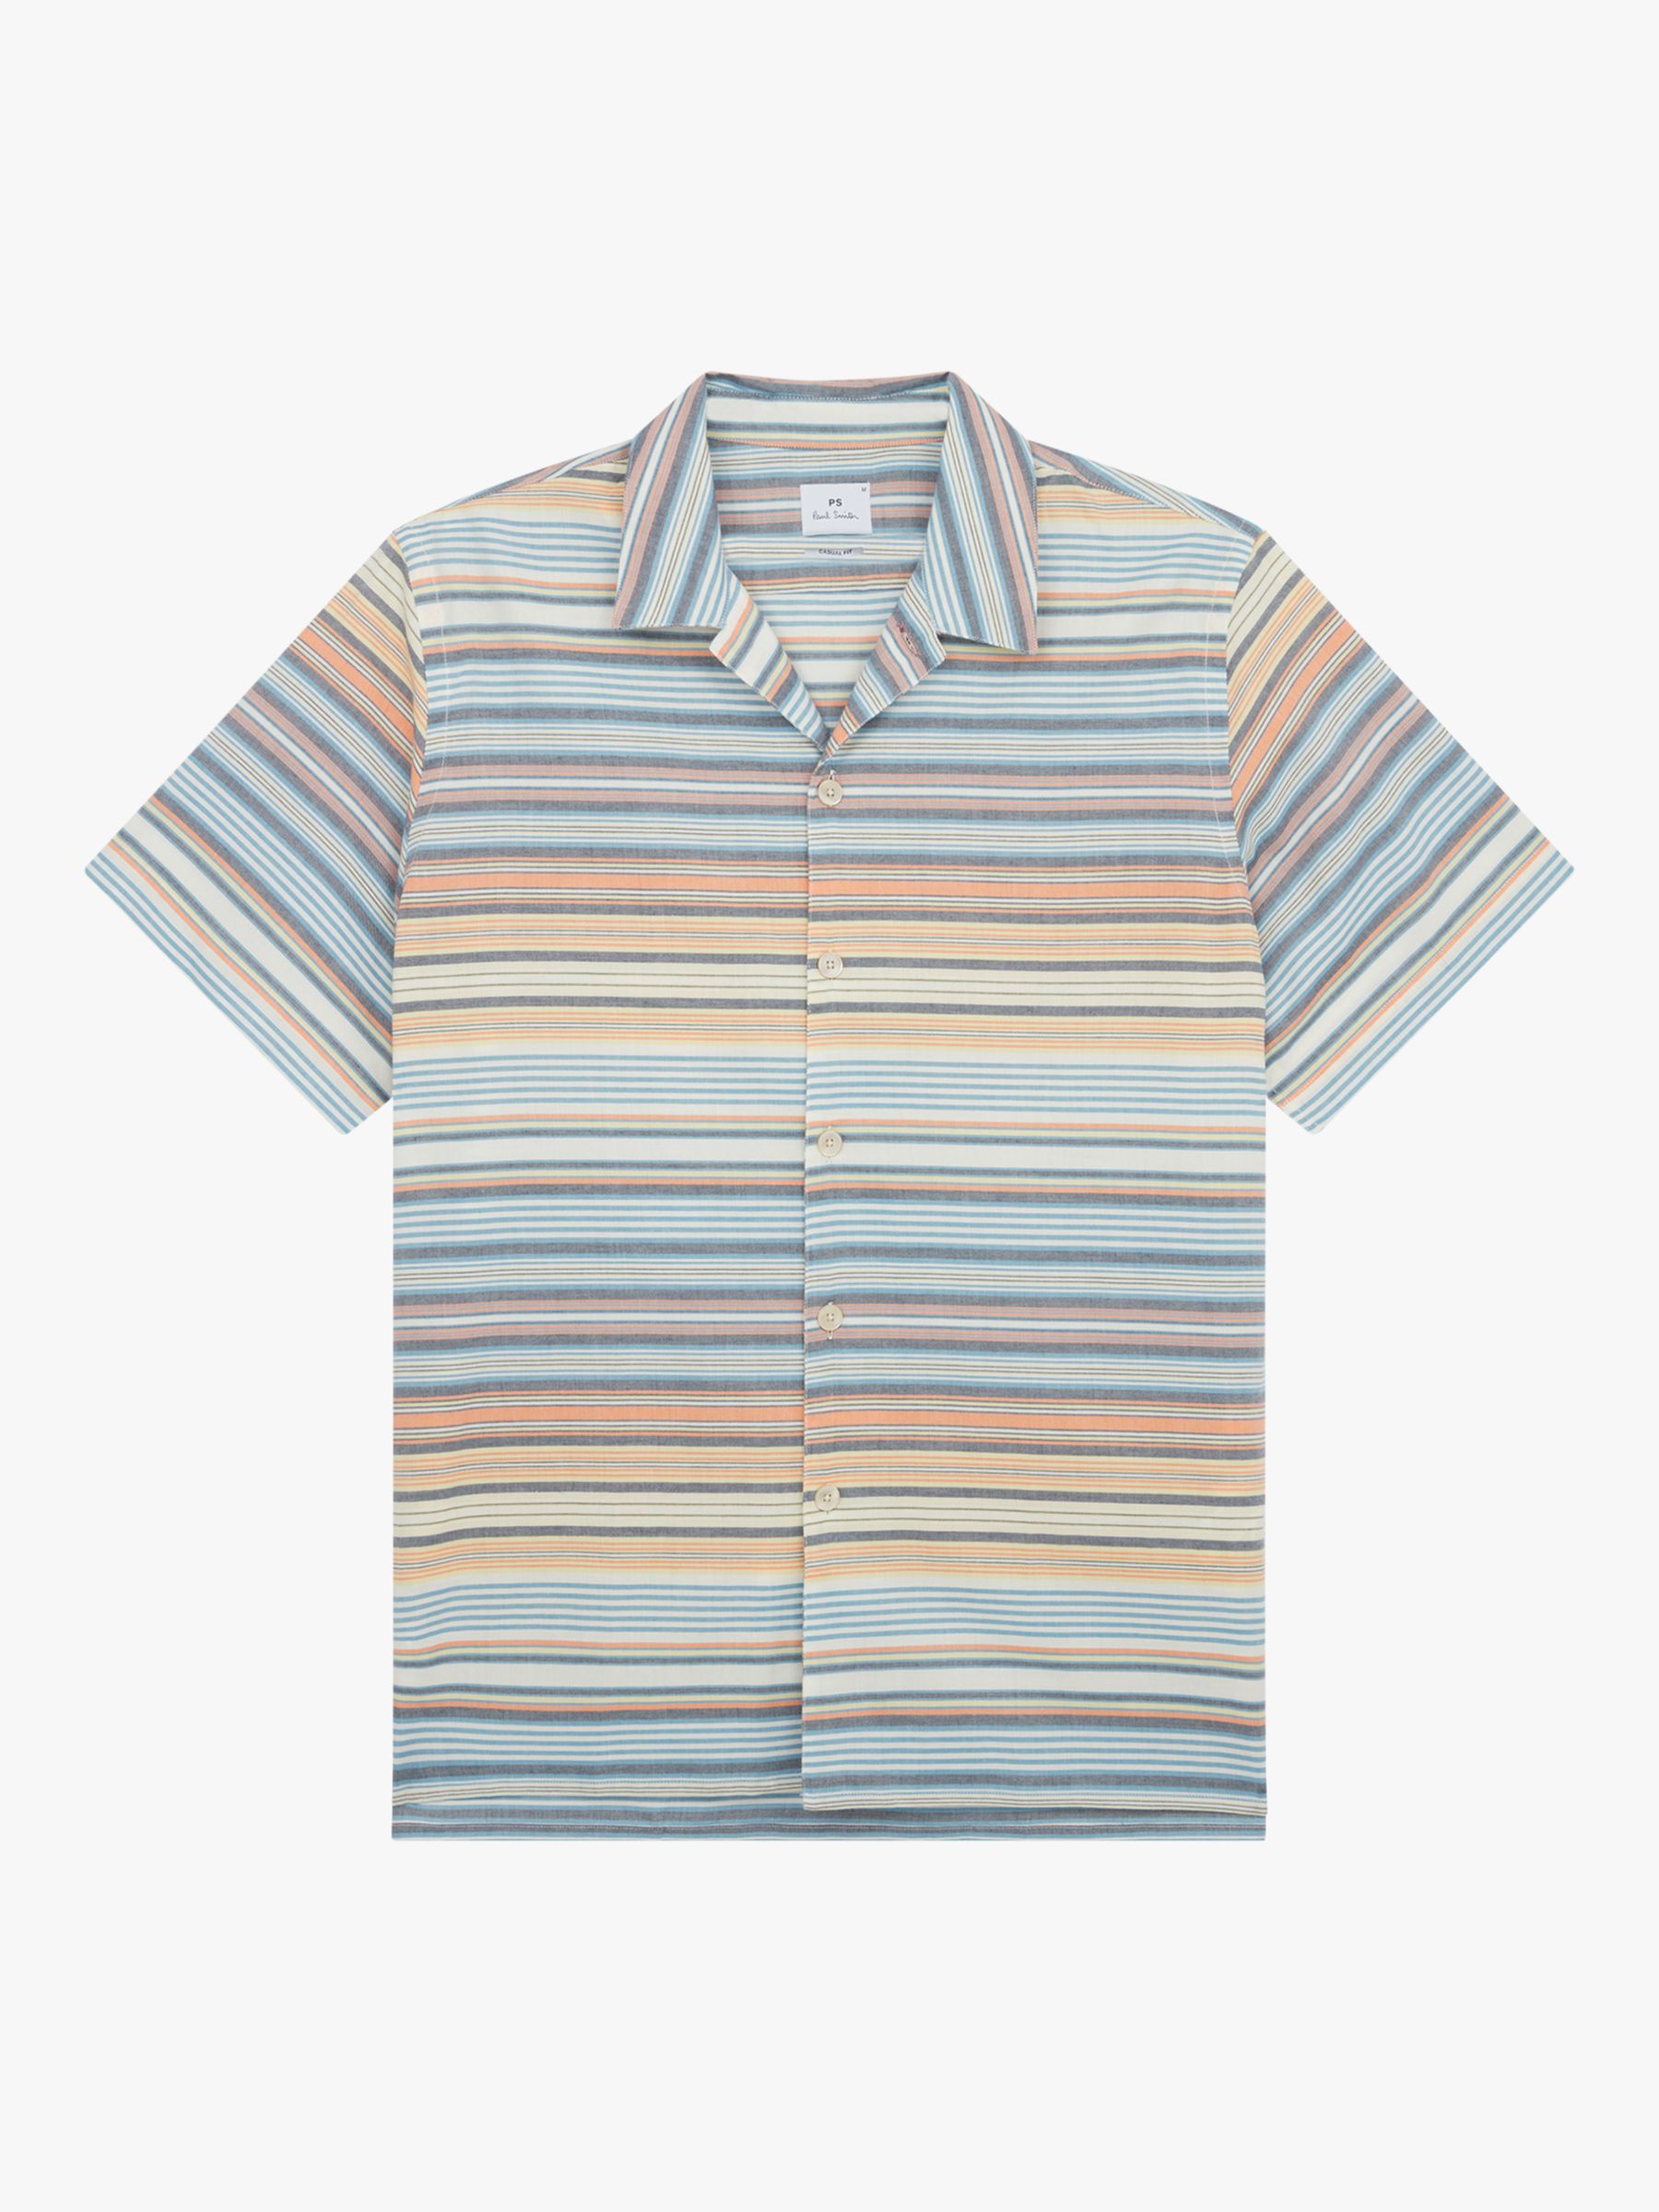 Paul Smith Casual Fit Stripe Cotton Shirt, Multi, XL